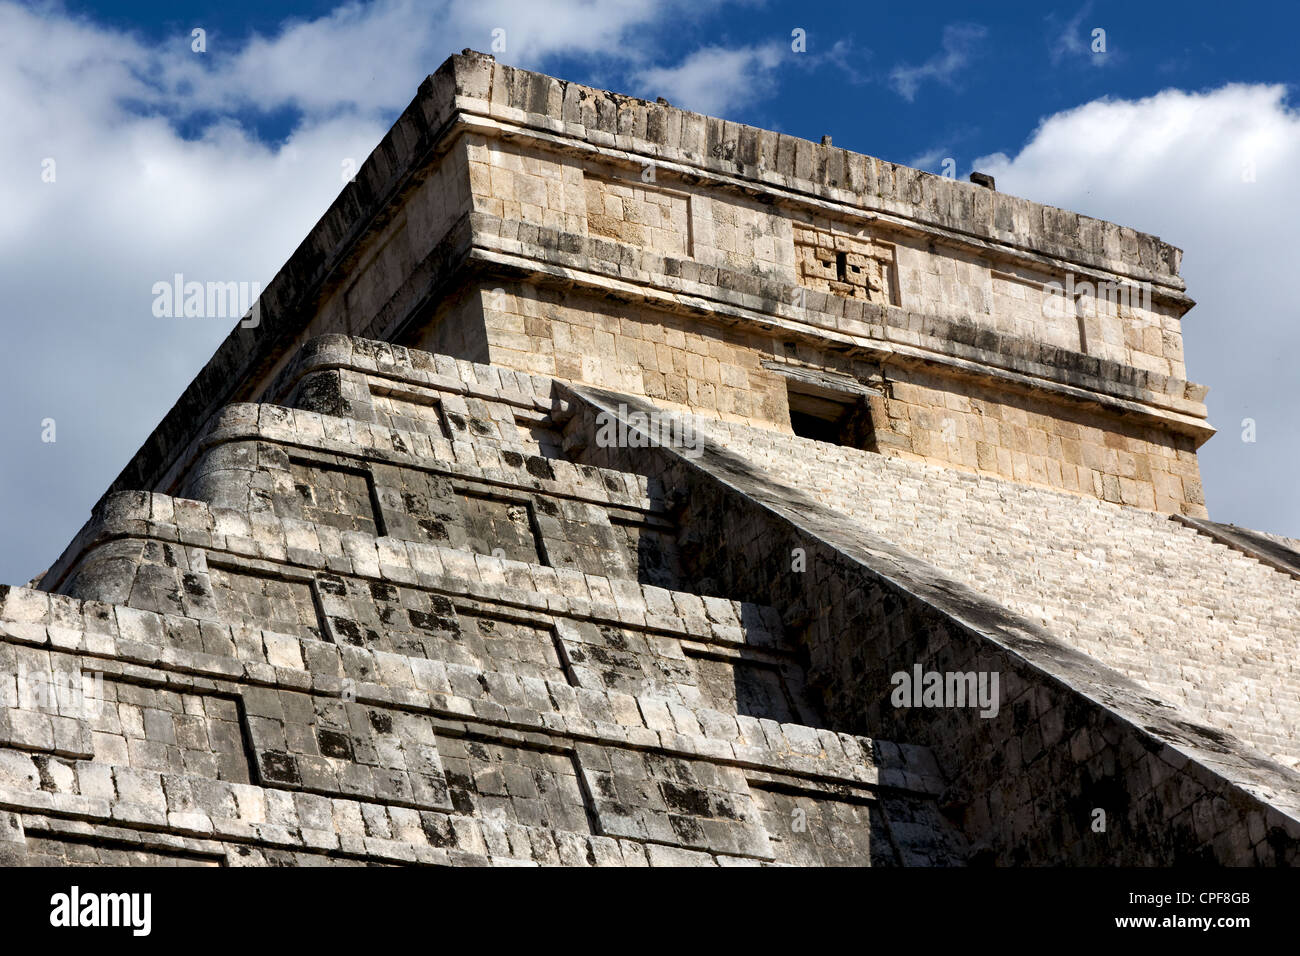 Detail of the top of the landmark Kukulkan pyramid at the Mayan city of Chichen Itza, Yucatan, Mexico. Stock Photo